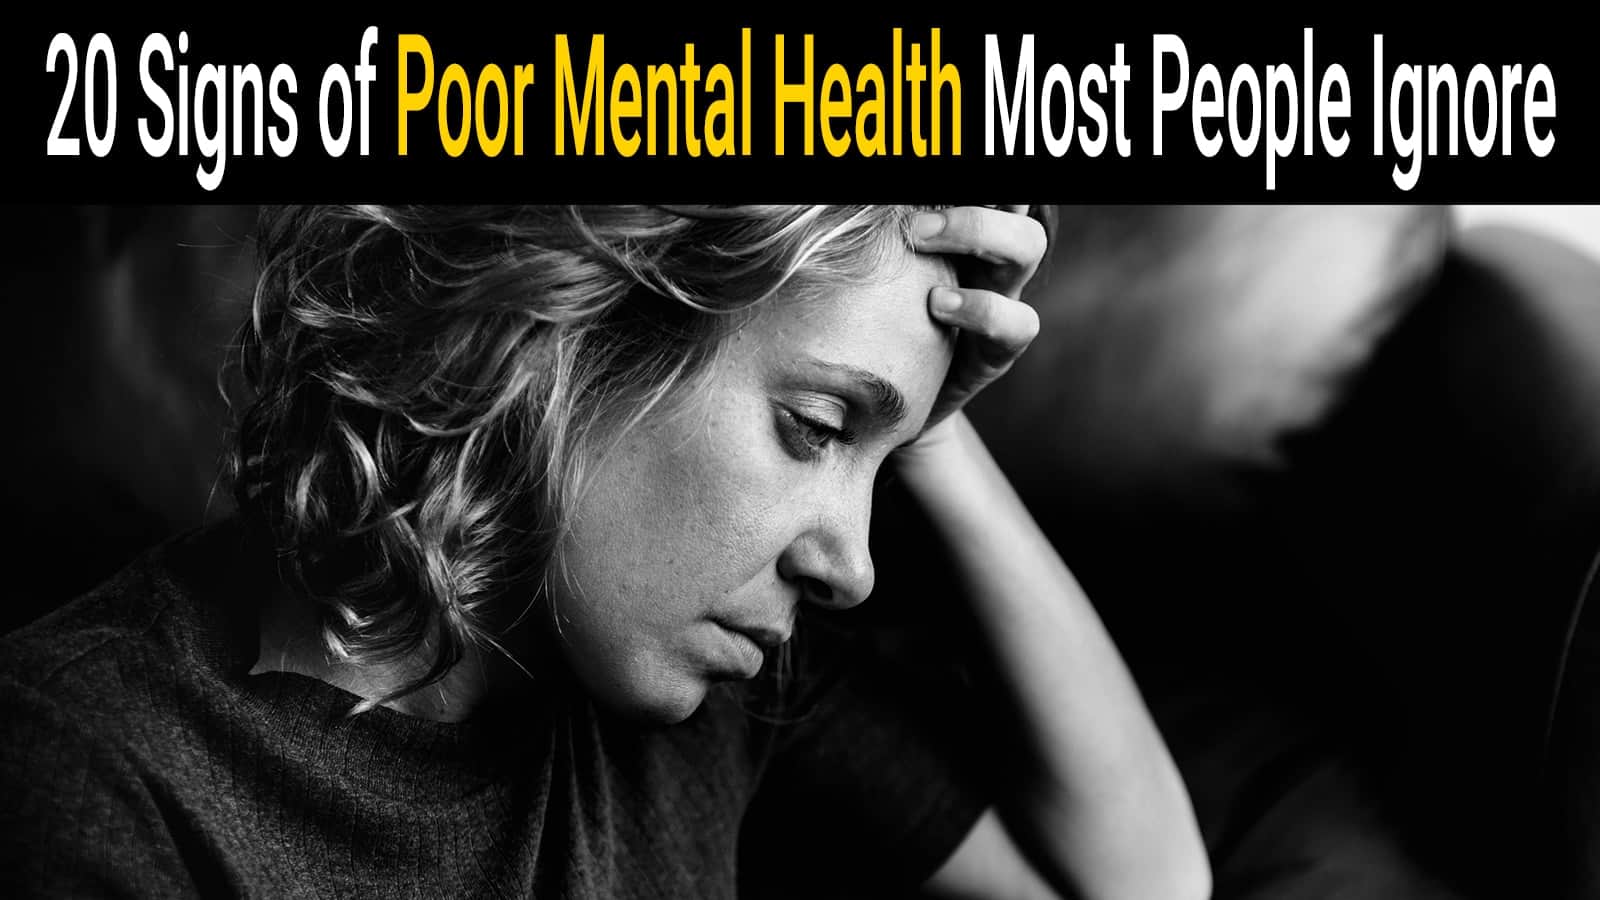 20 Signs of Poor Mental Health Most People Ignore